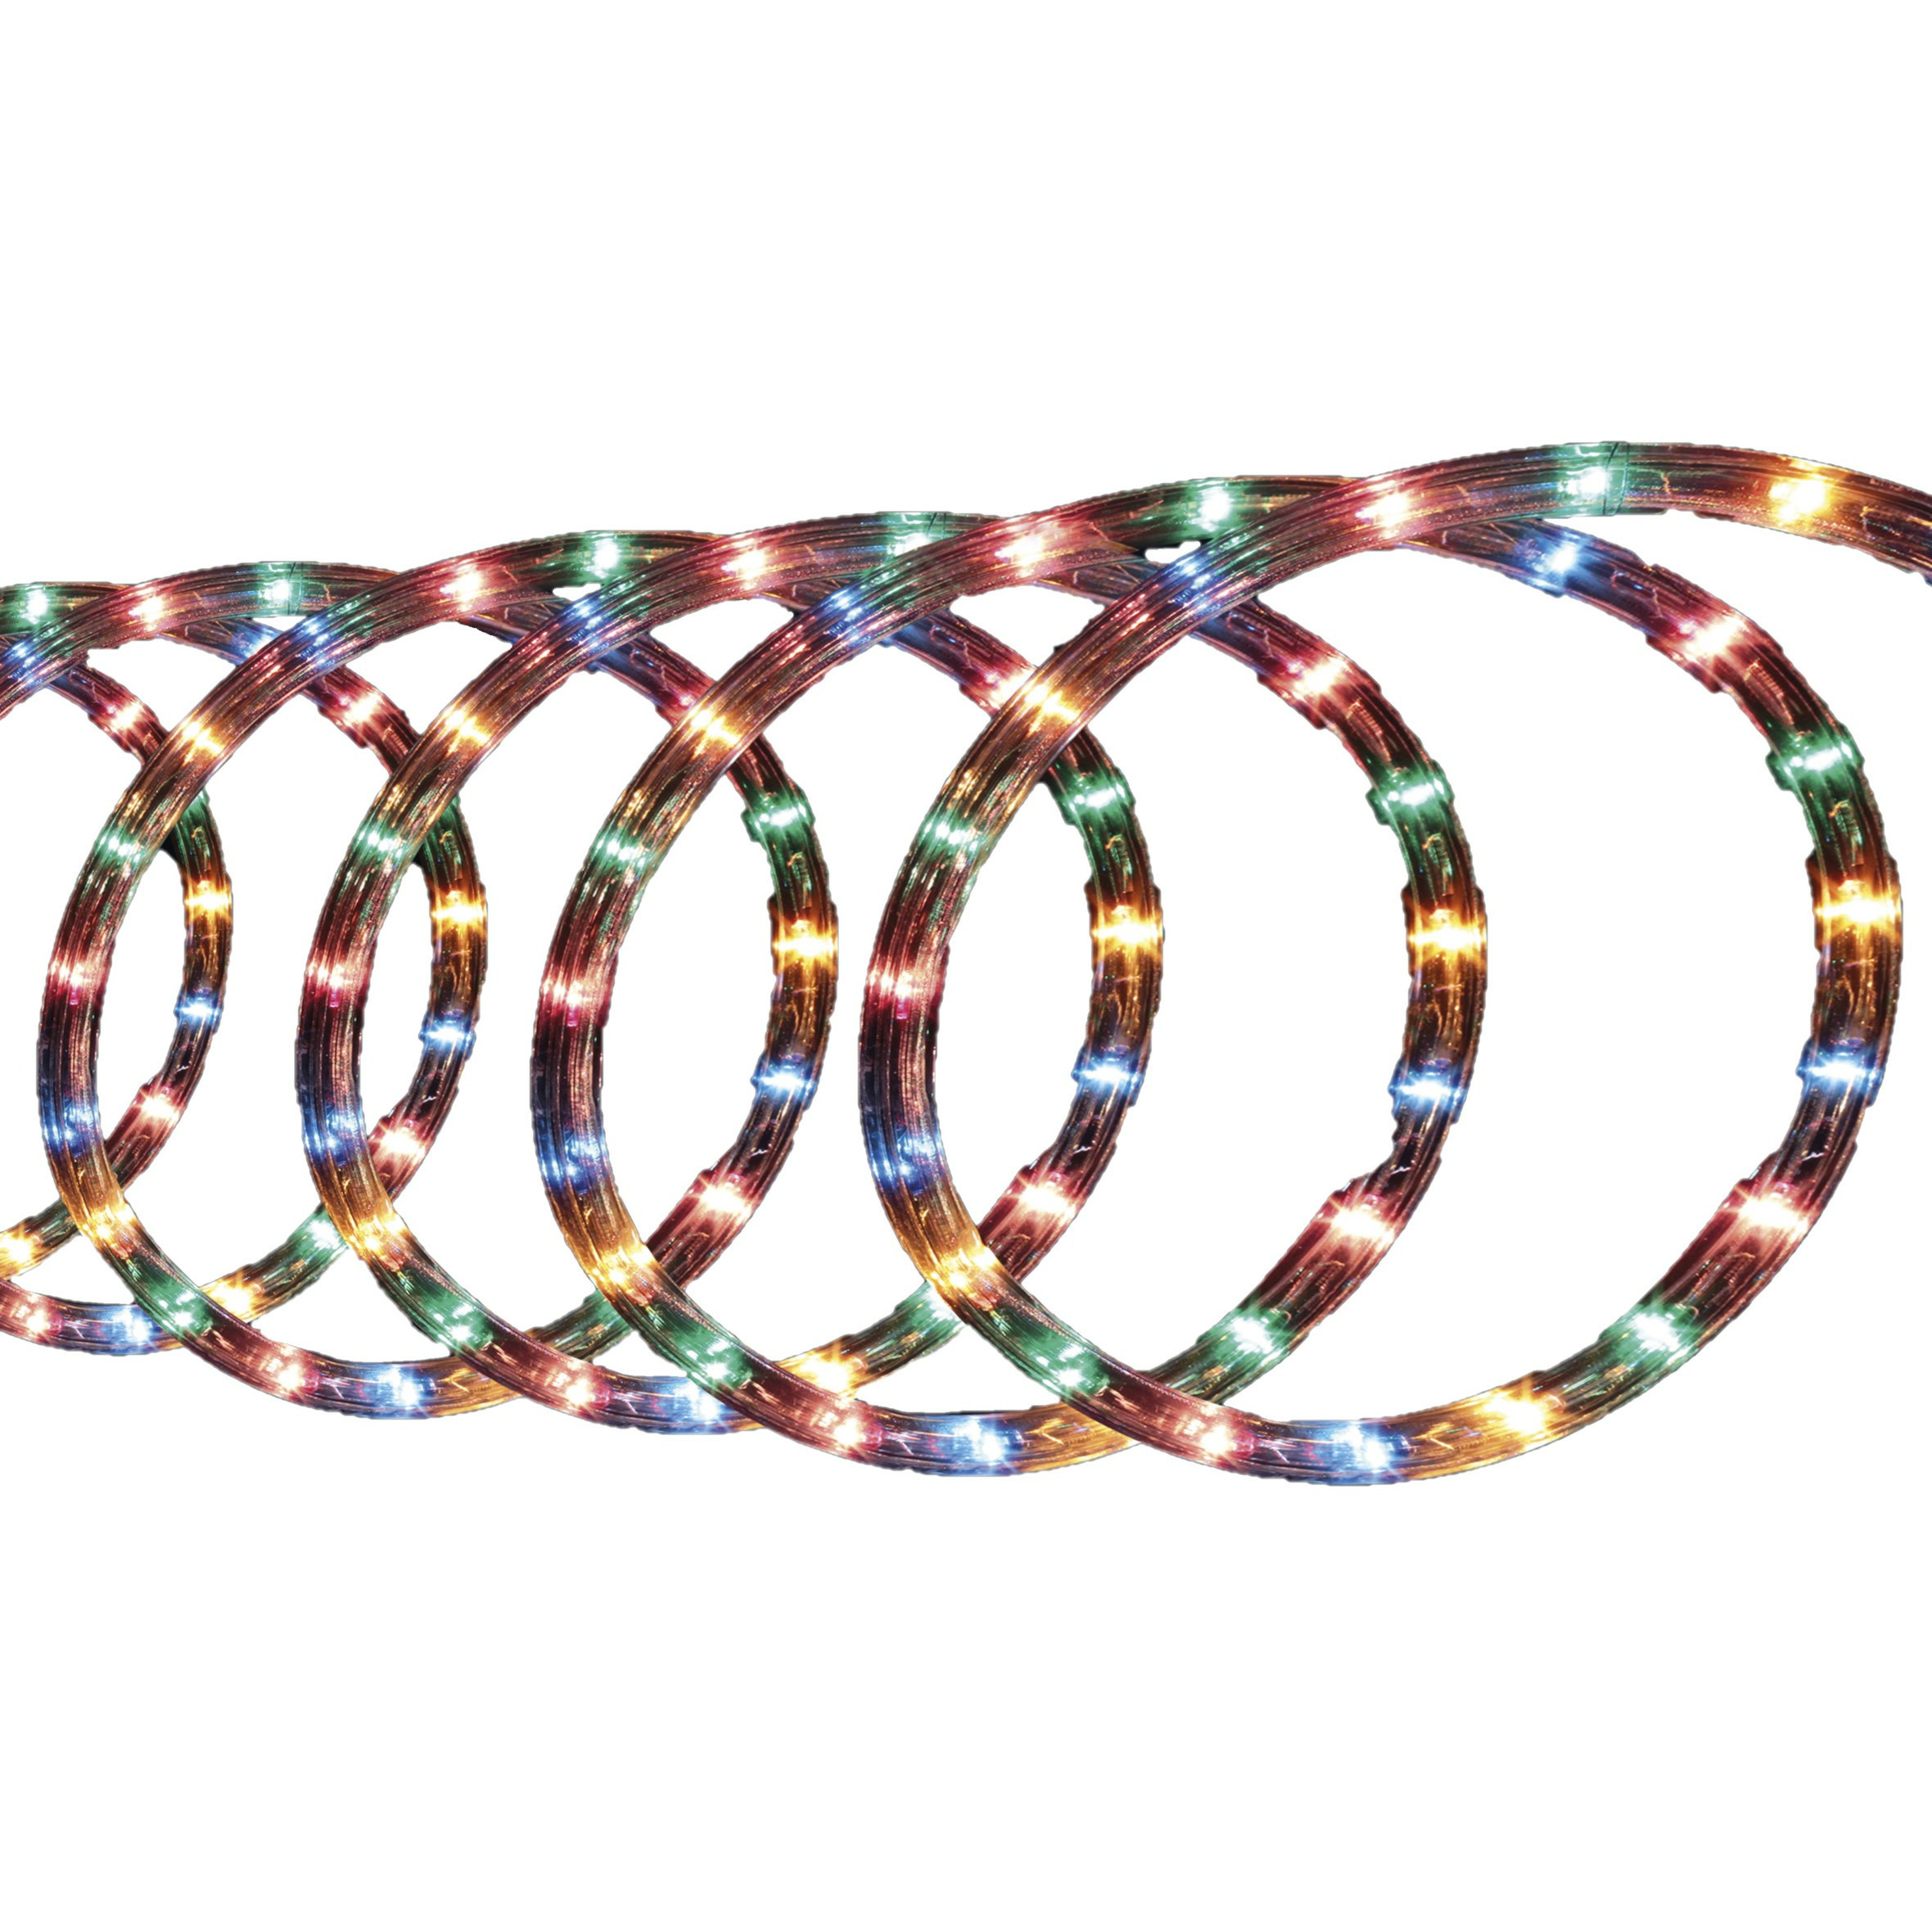 Feeric lights & Christmas Lichtslang 6M gekleurd 108 LEDs